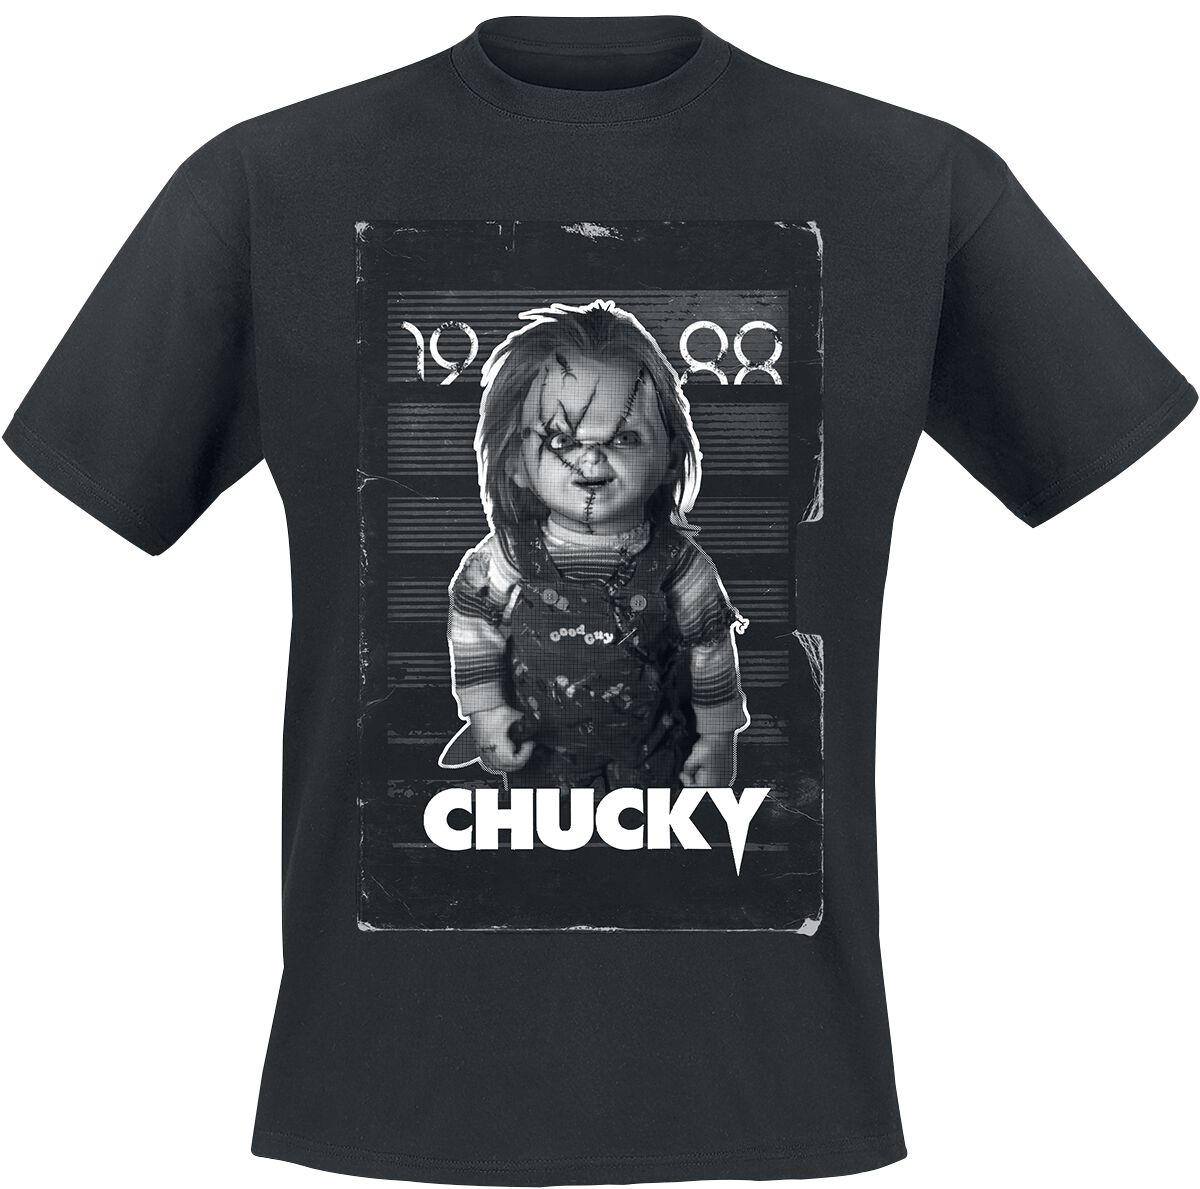 Chucky VHS Cover T-Shirt schwarz in M